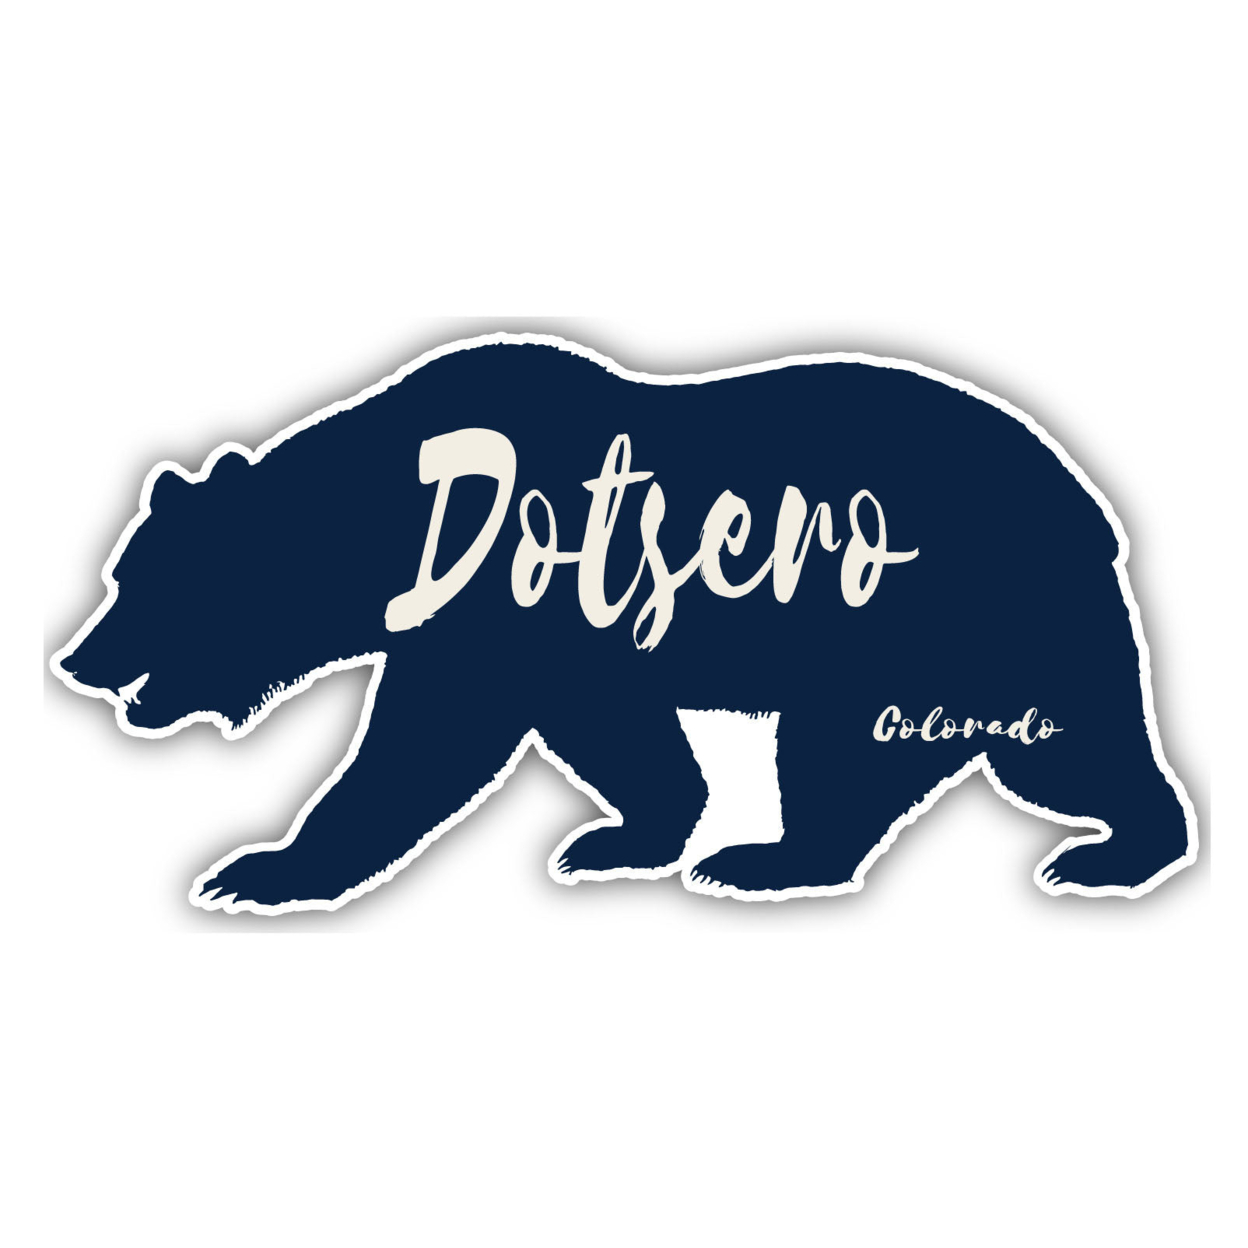 Dotsero Colorado Souvenir Decorative Stickers (Choose Theme And Size) - 4-Pack, 6-Inch, Bear